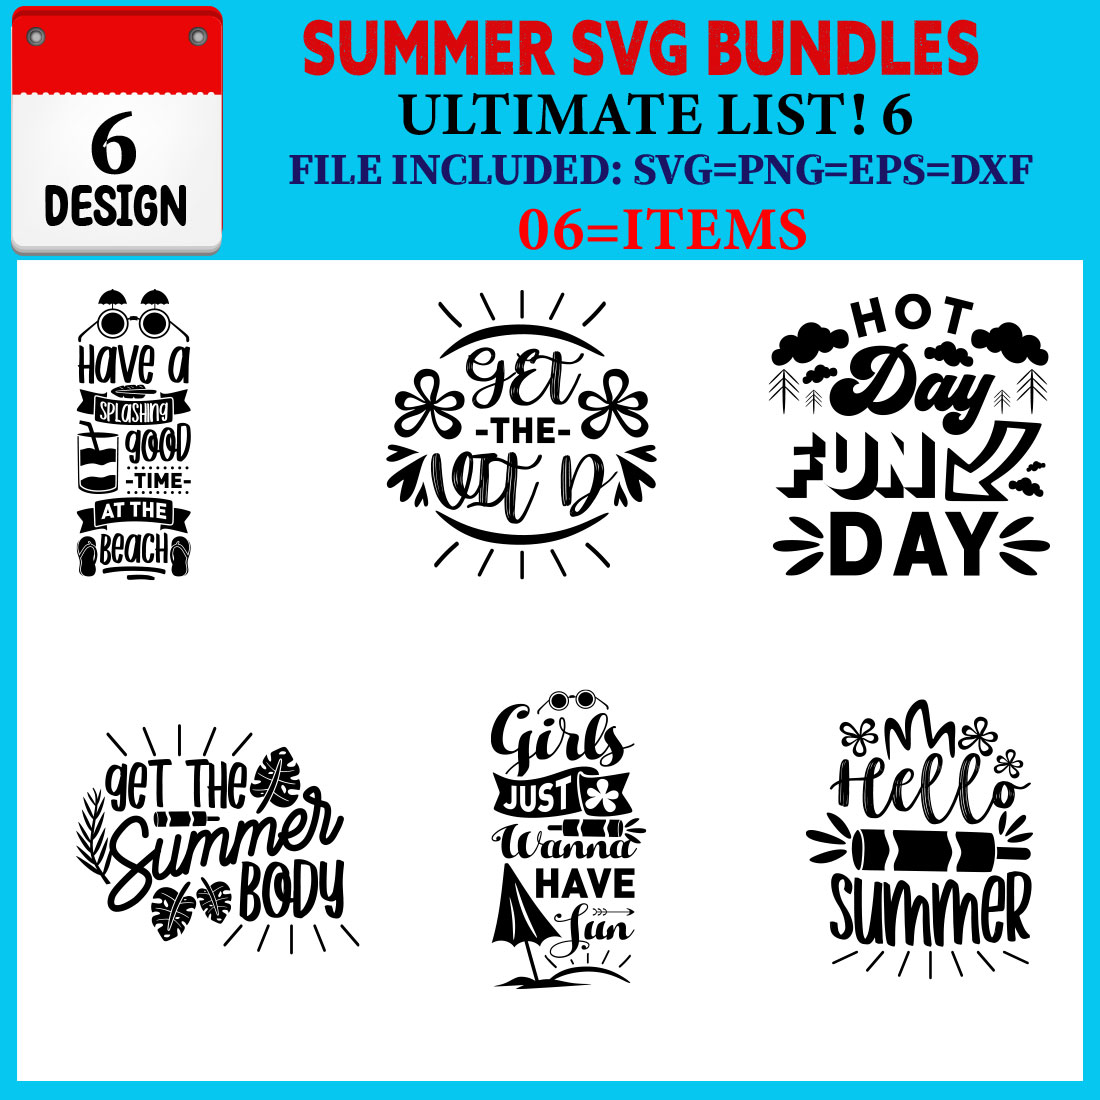 Summer T-shirt Design Bundle Vol-06 cover image.